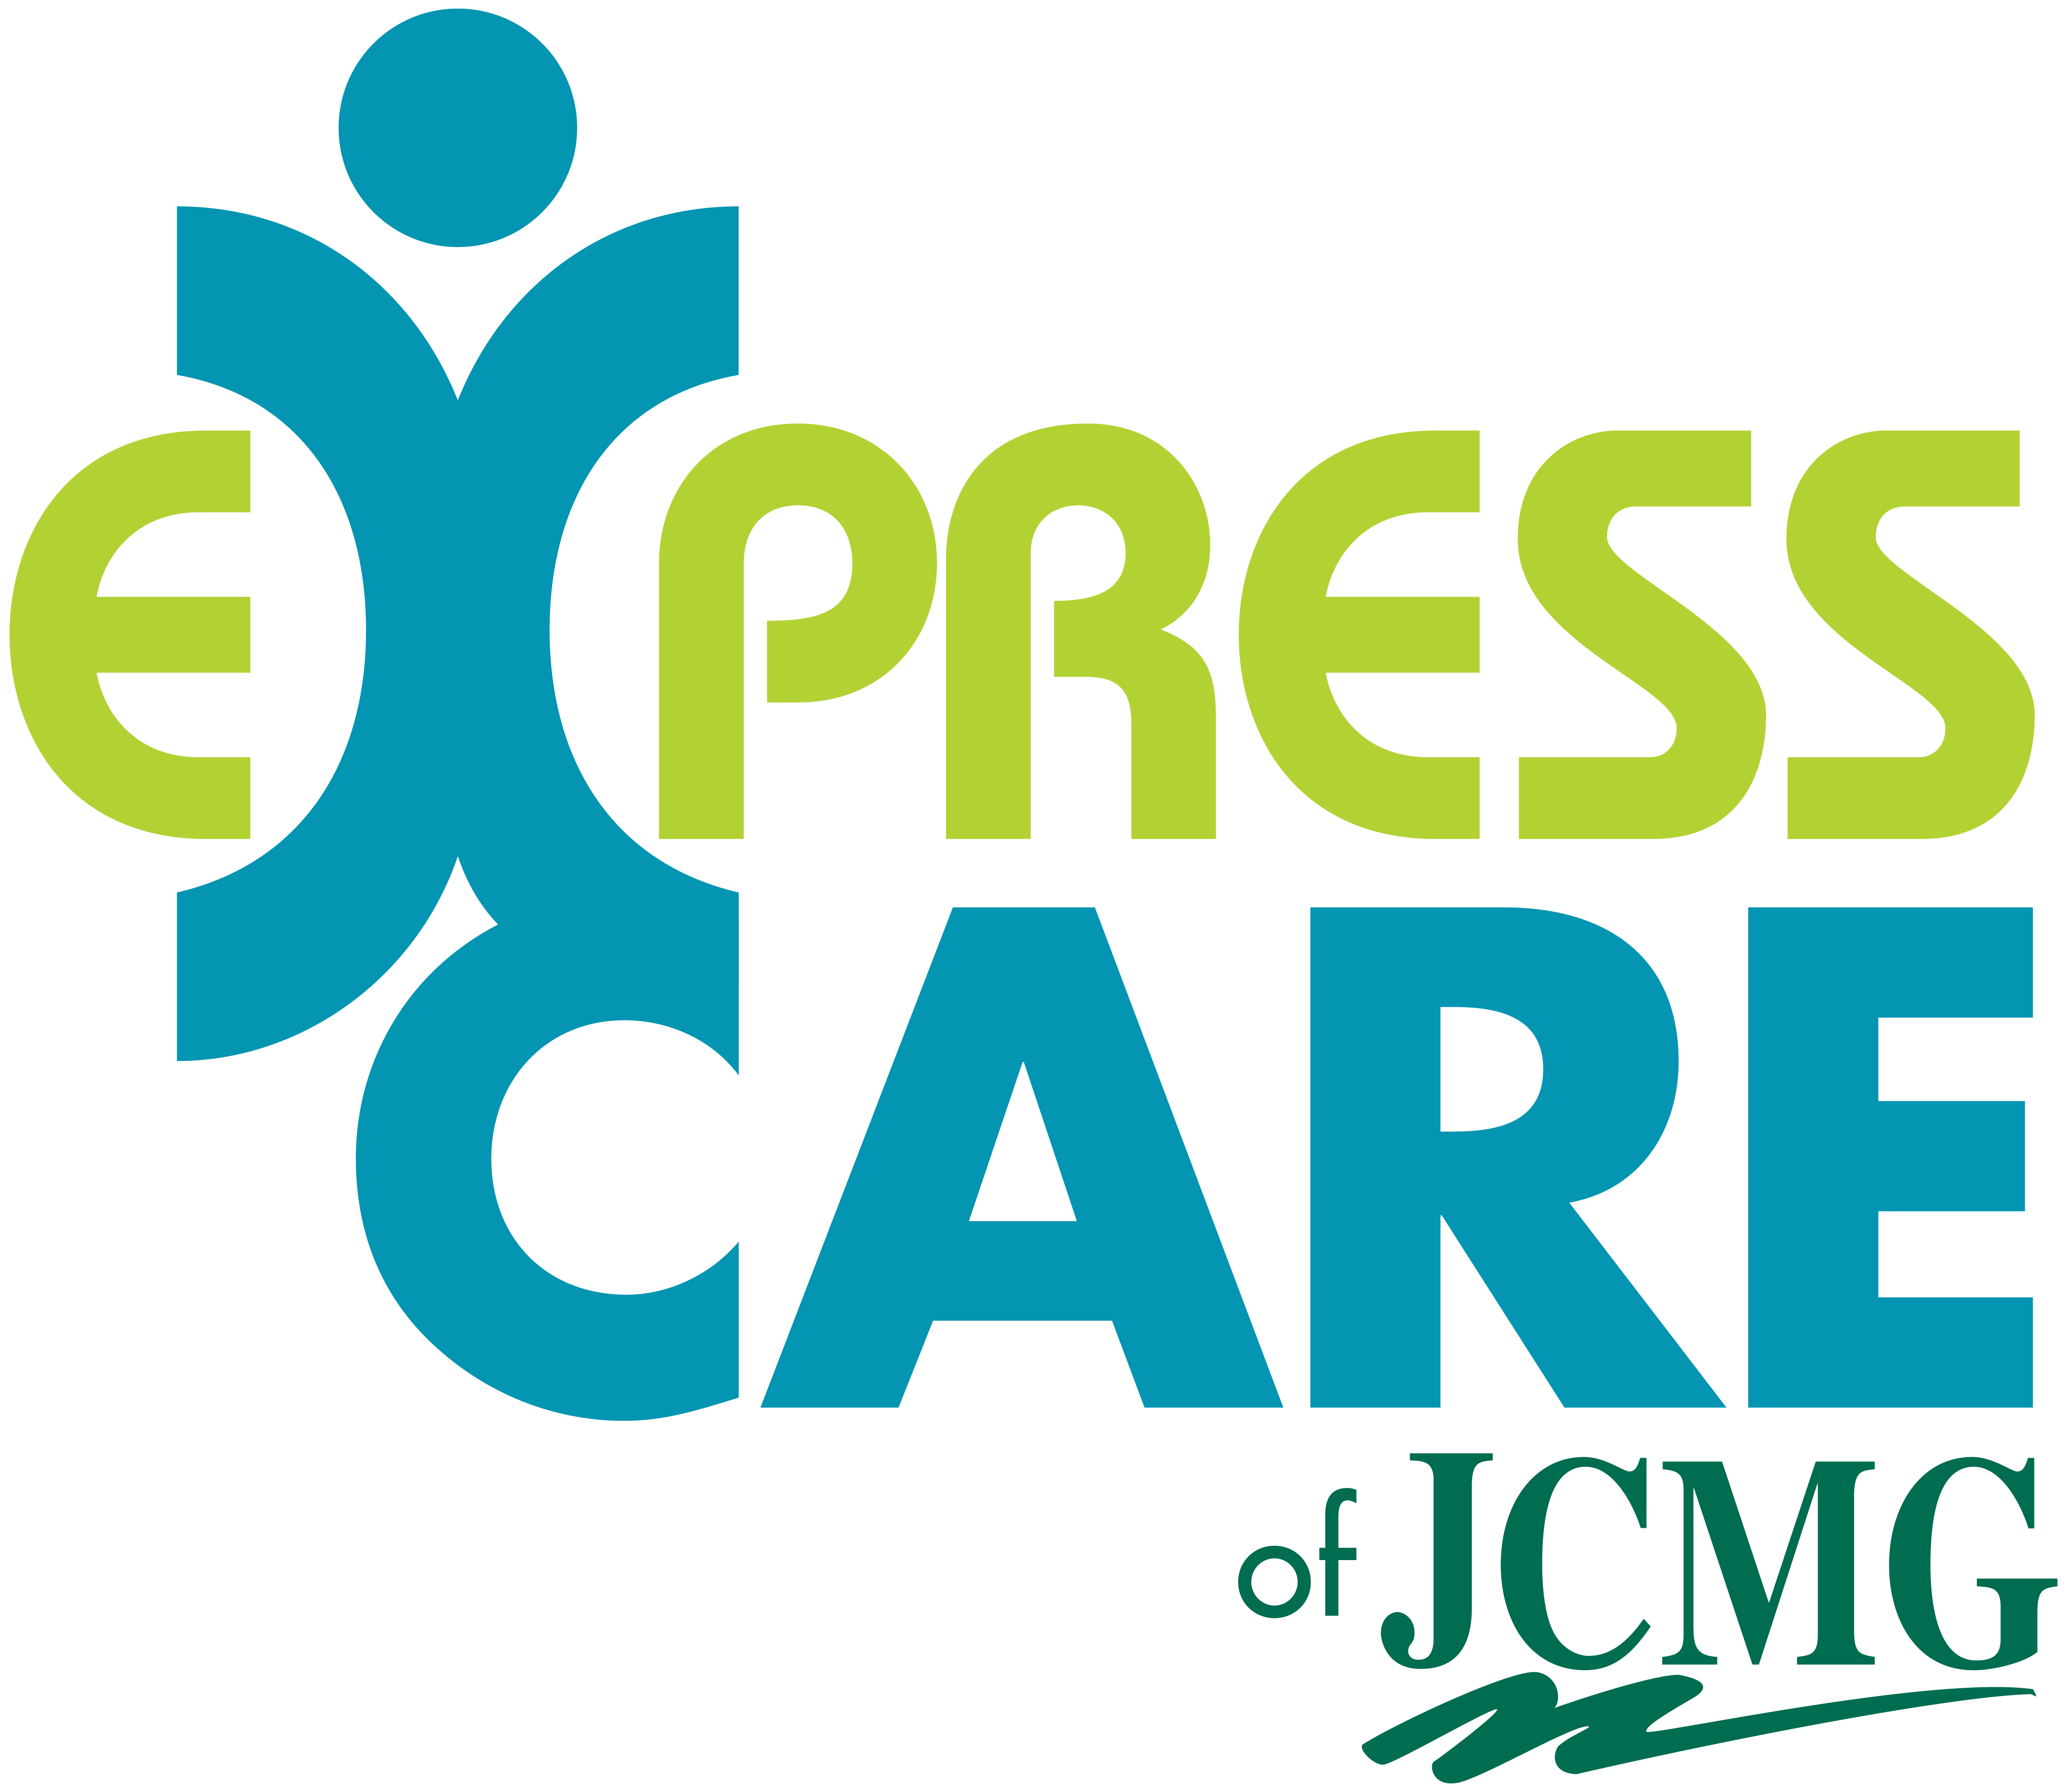 Express Care of JCMG - Elm Logo